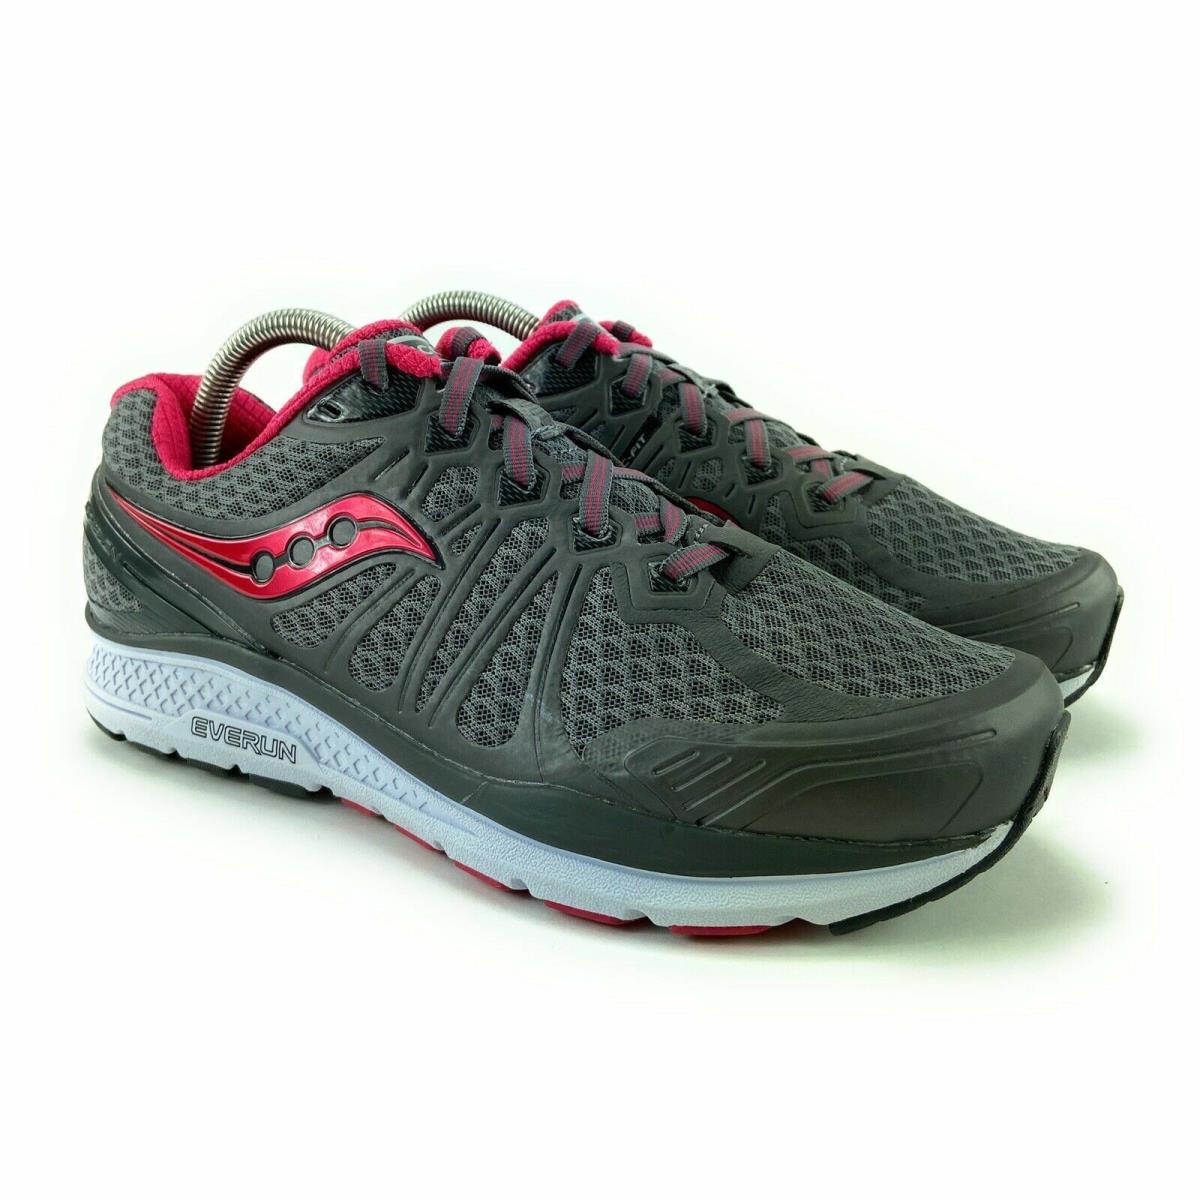 Saucony Women`s Echelon 6 Grey Pink Running Shoes S10384-1 Size 11.5 M